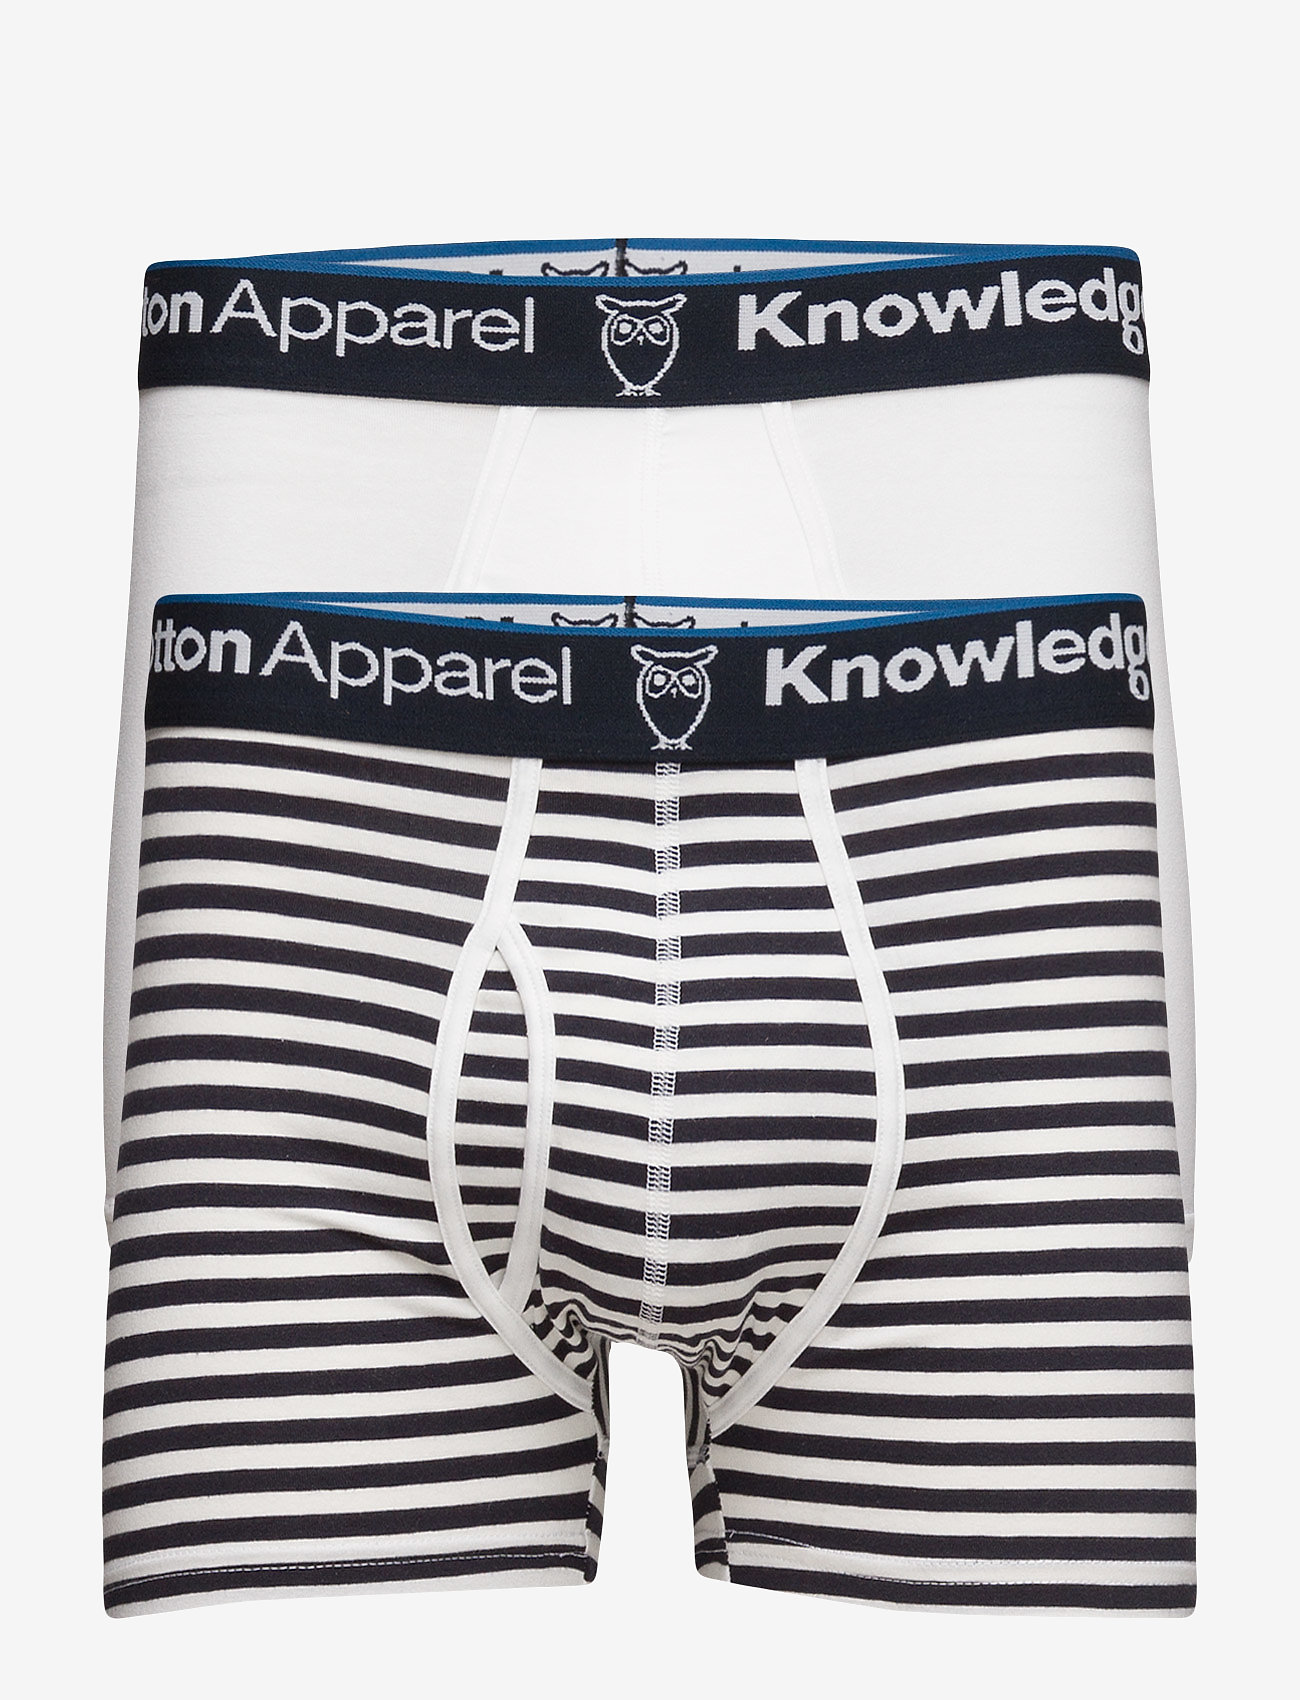 Knowledge Cotton Apparel - MAPLE 2 pack striped underwear - total eclipse - 0